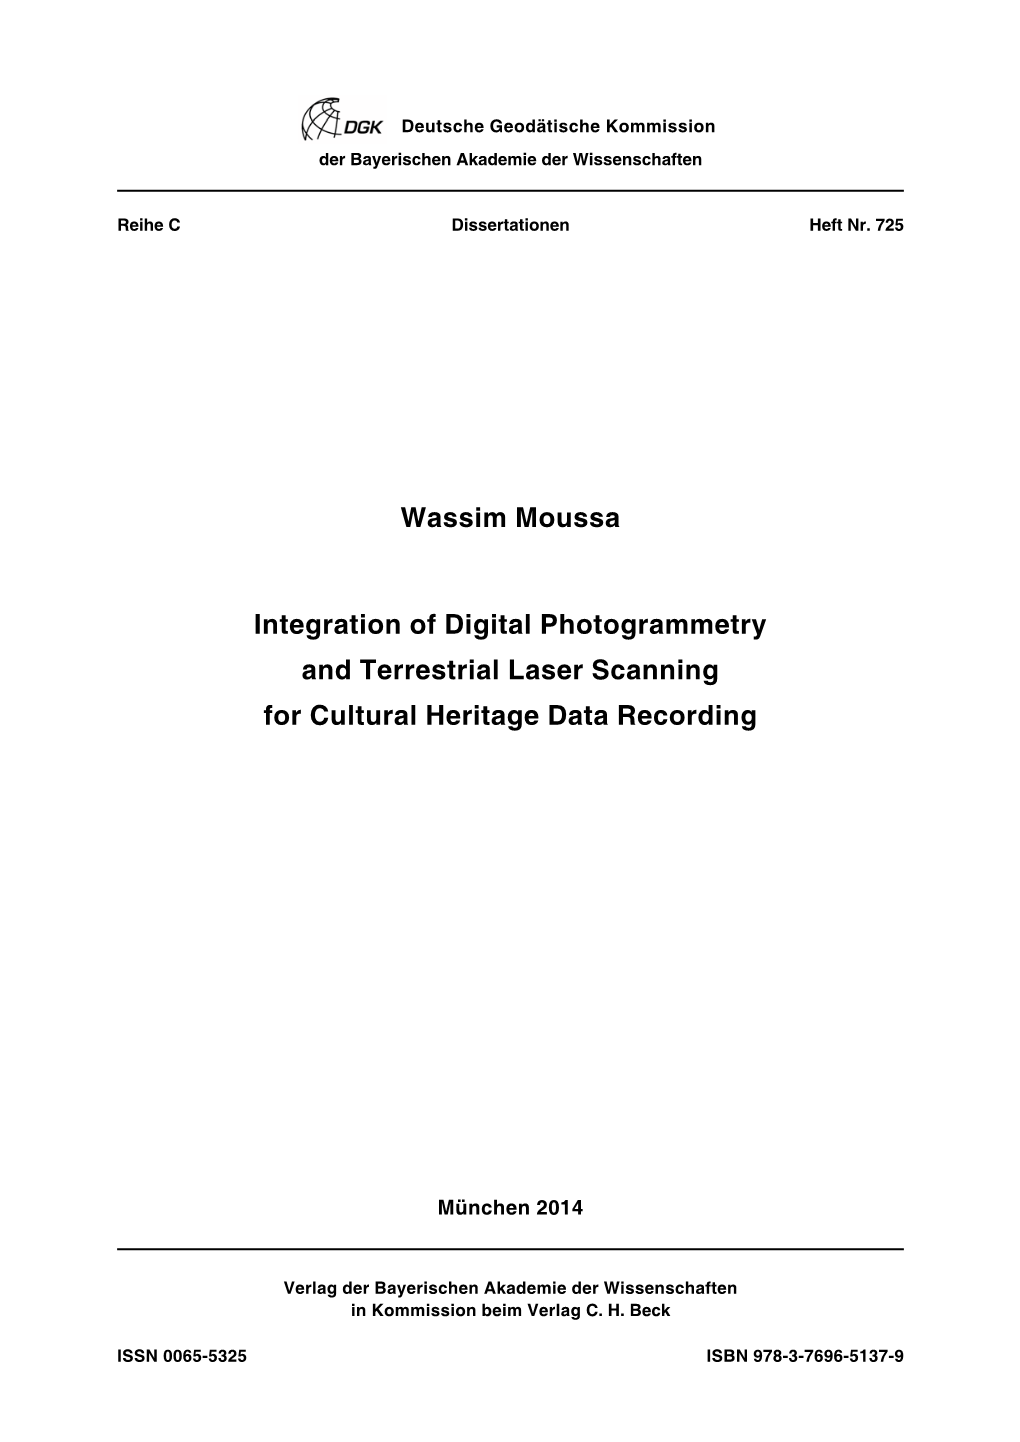 Wassim Moussa Integration of Digital Photogrammetry and Terrestrial